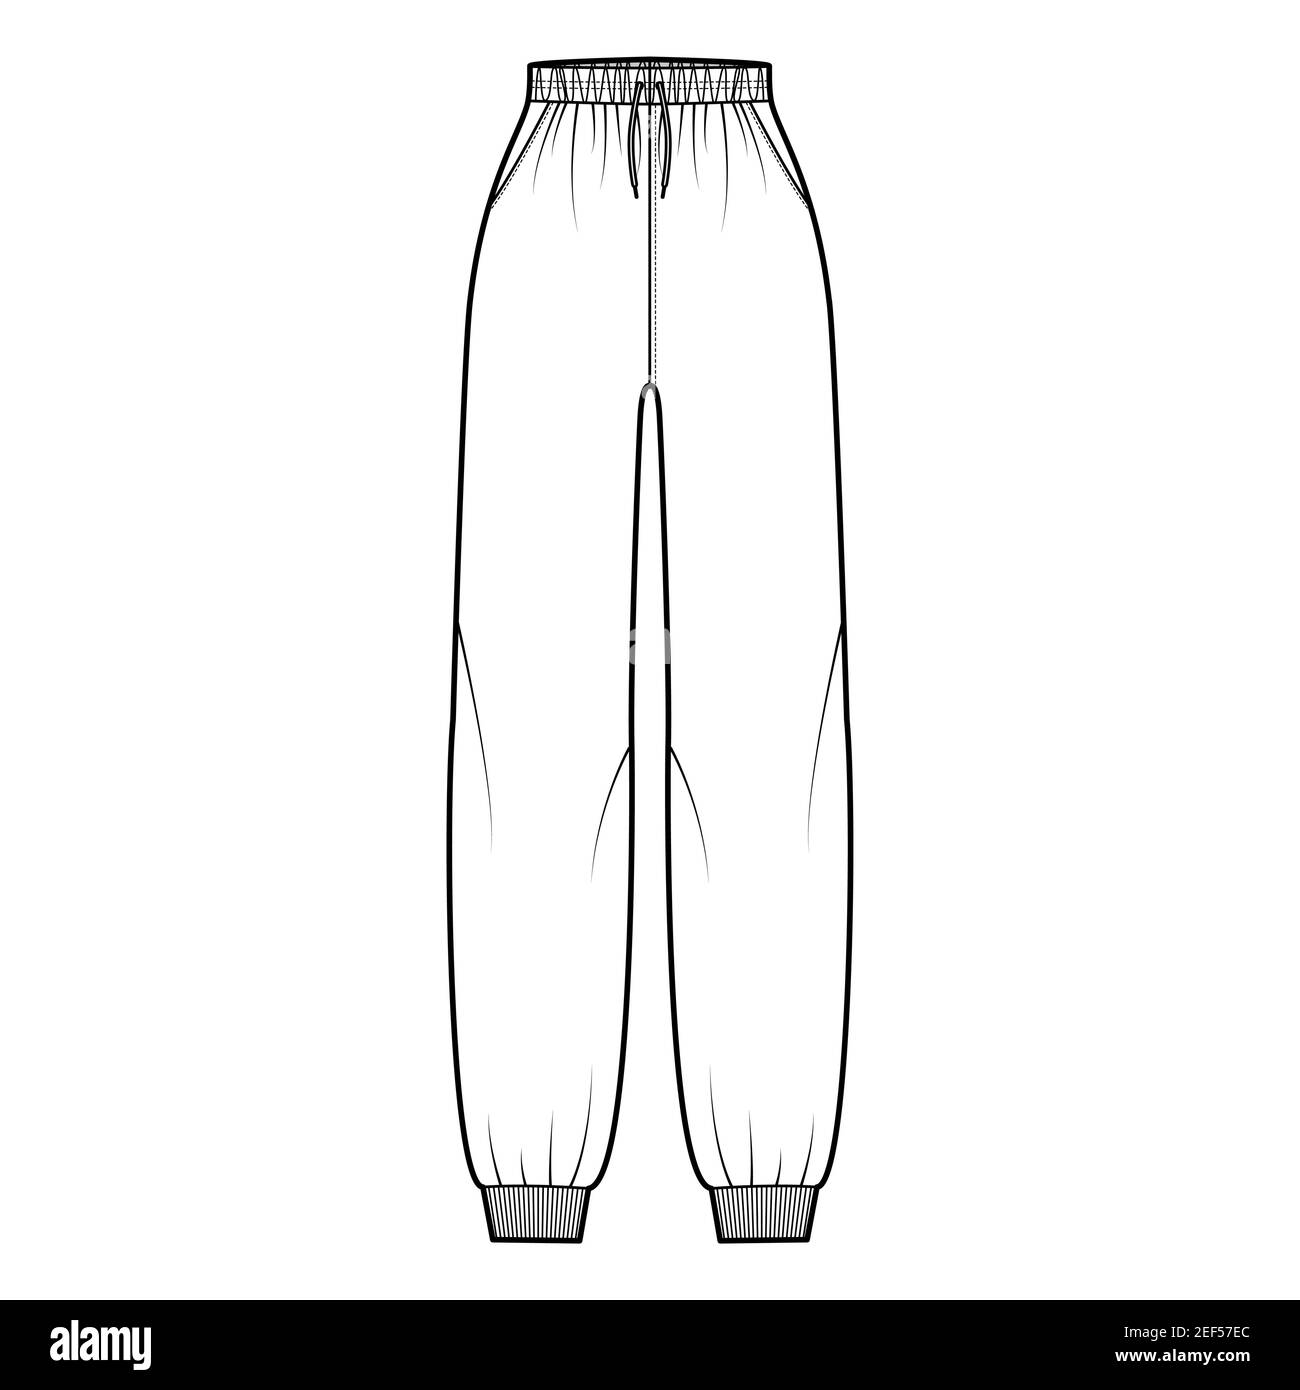 Sweatpants technical fashion illustration with elastic cuffs